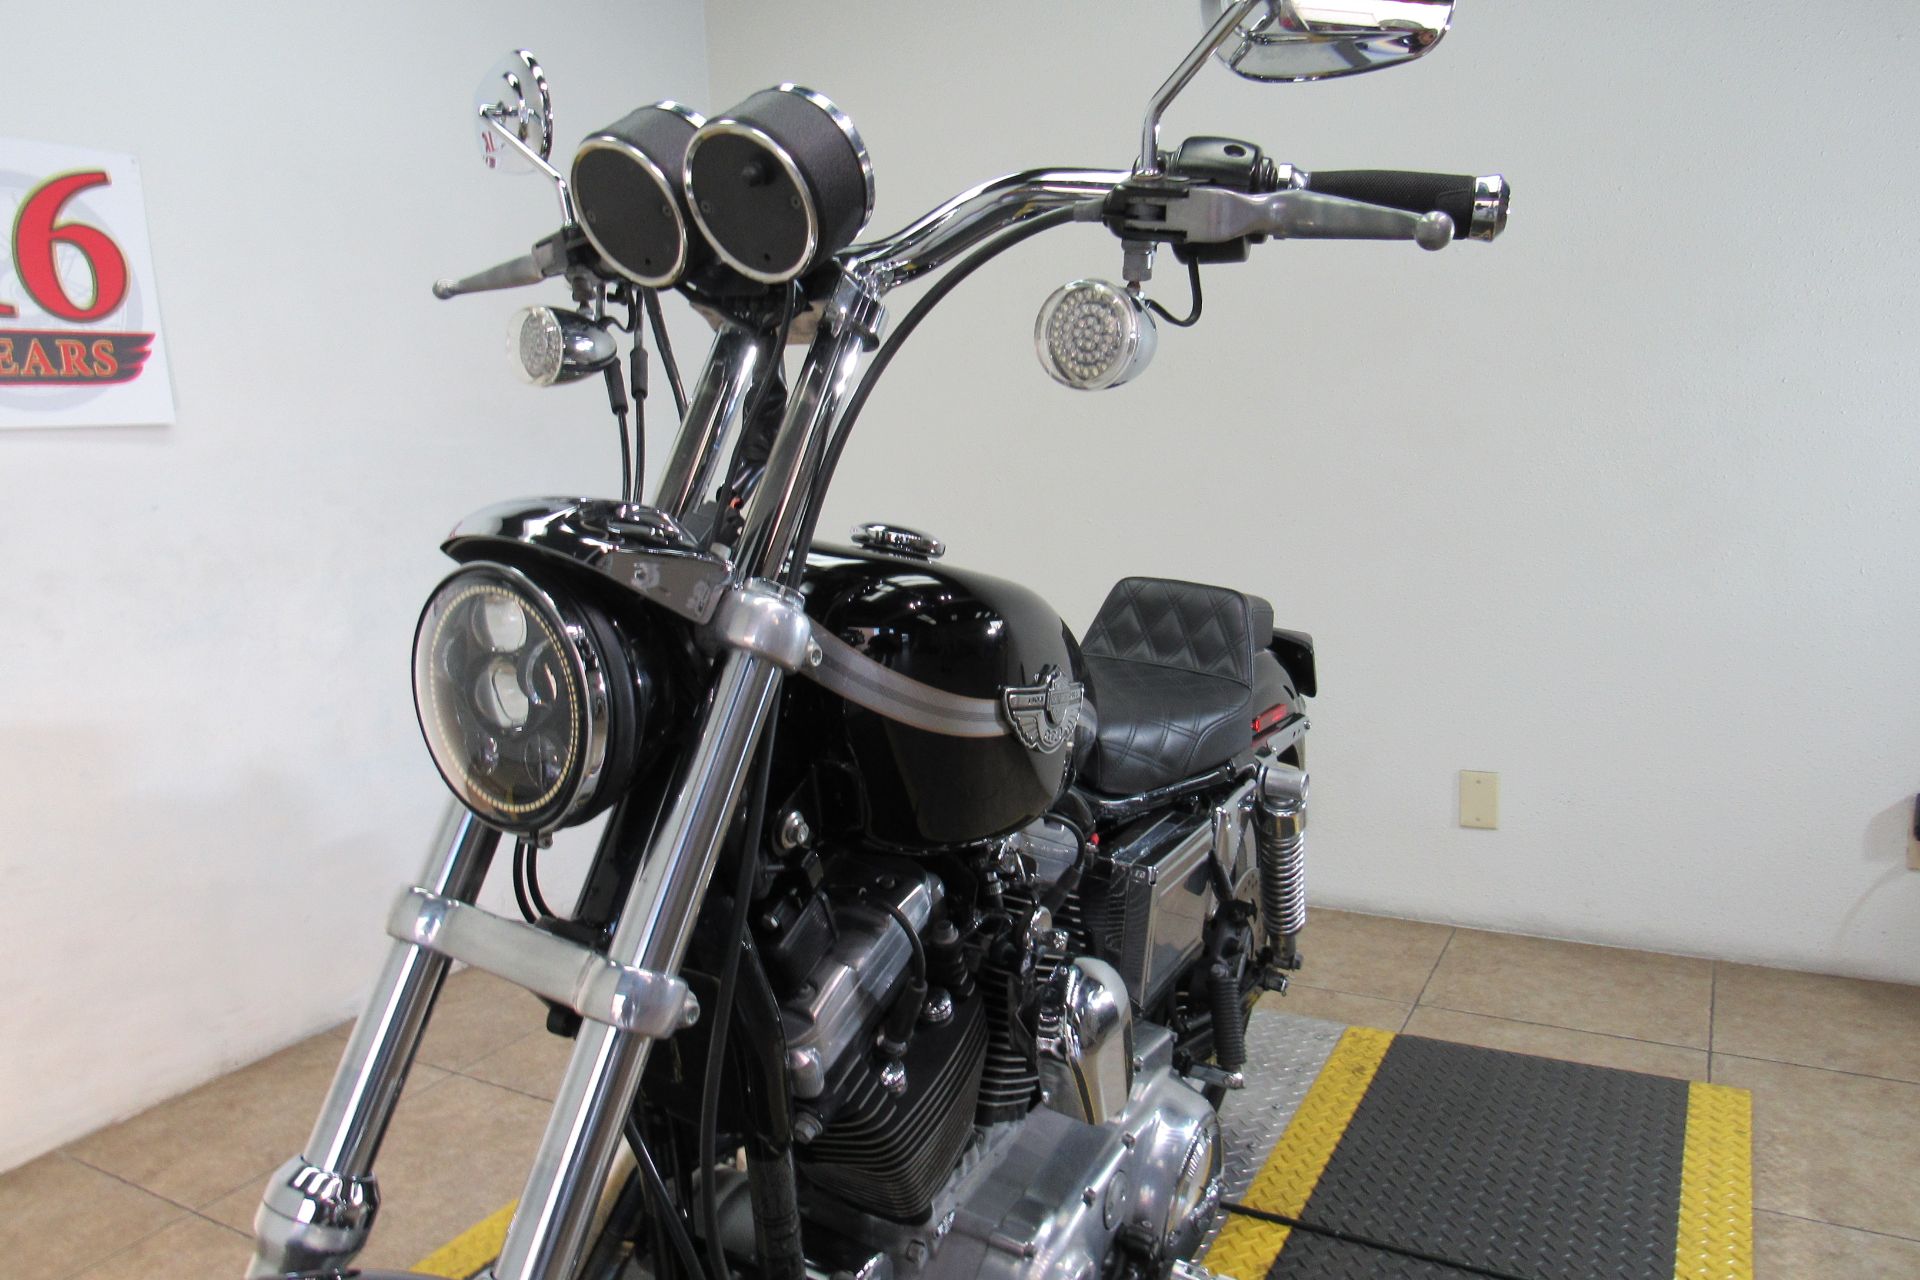 2003 Harley-Davidson XLH Sportster® 1200 in Temecula, California - Photo 4